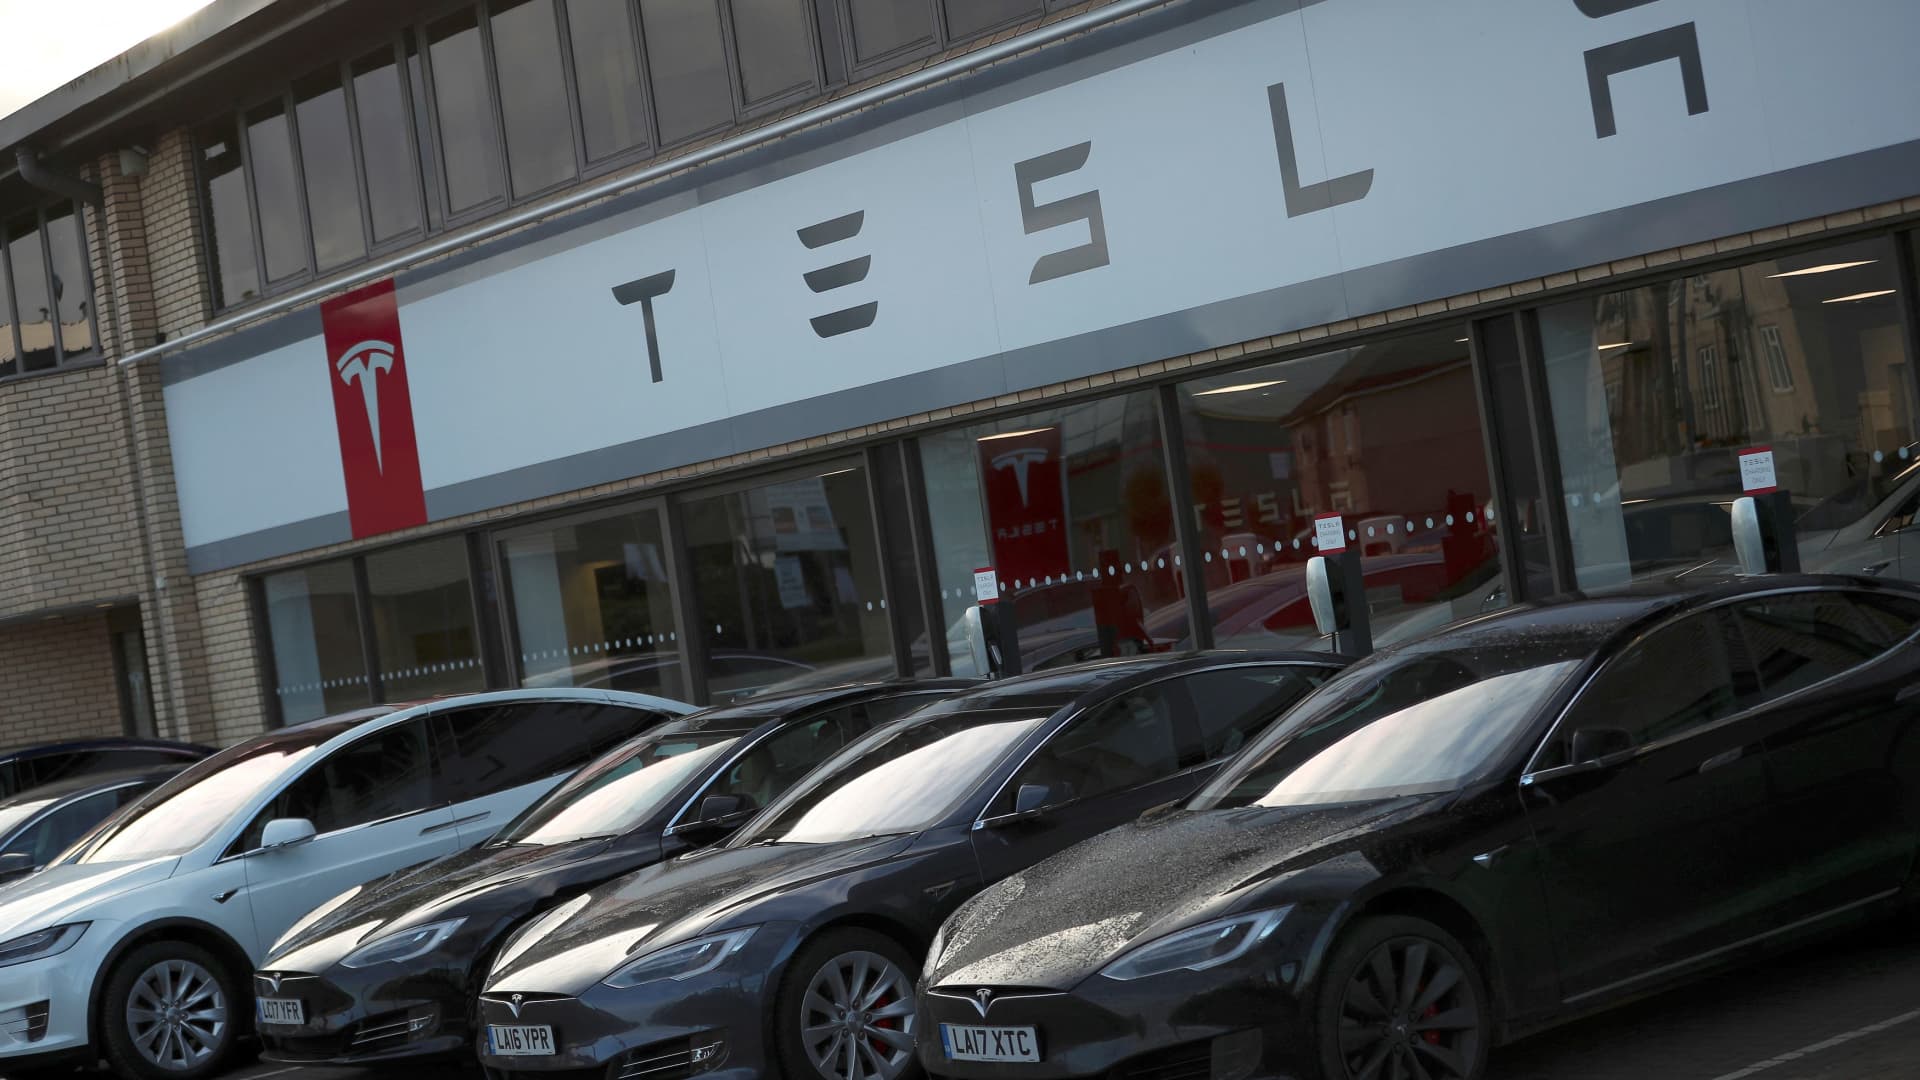 A Tesla dealership is seen in West Drayton, just outside London, Britain, February 7, 2018.